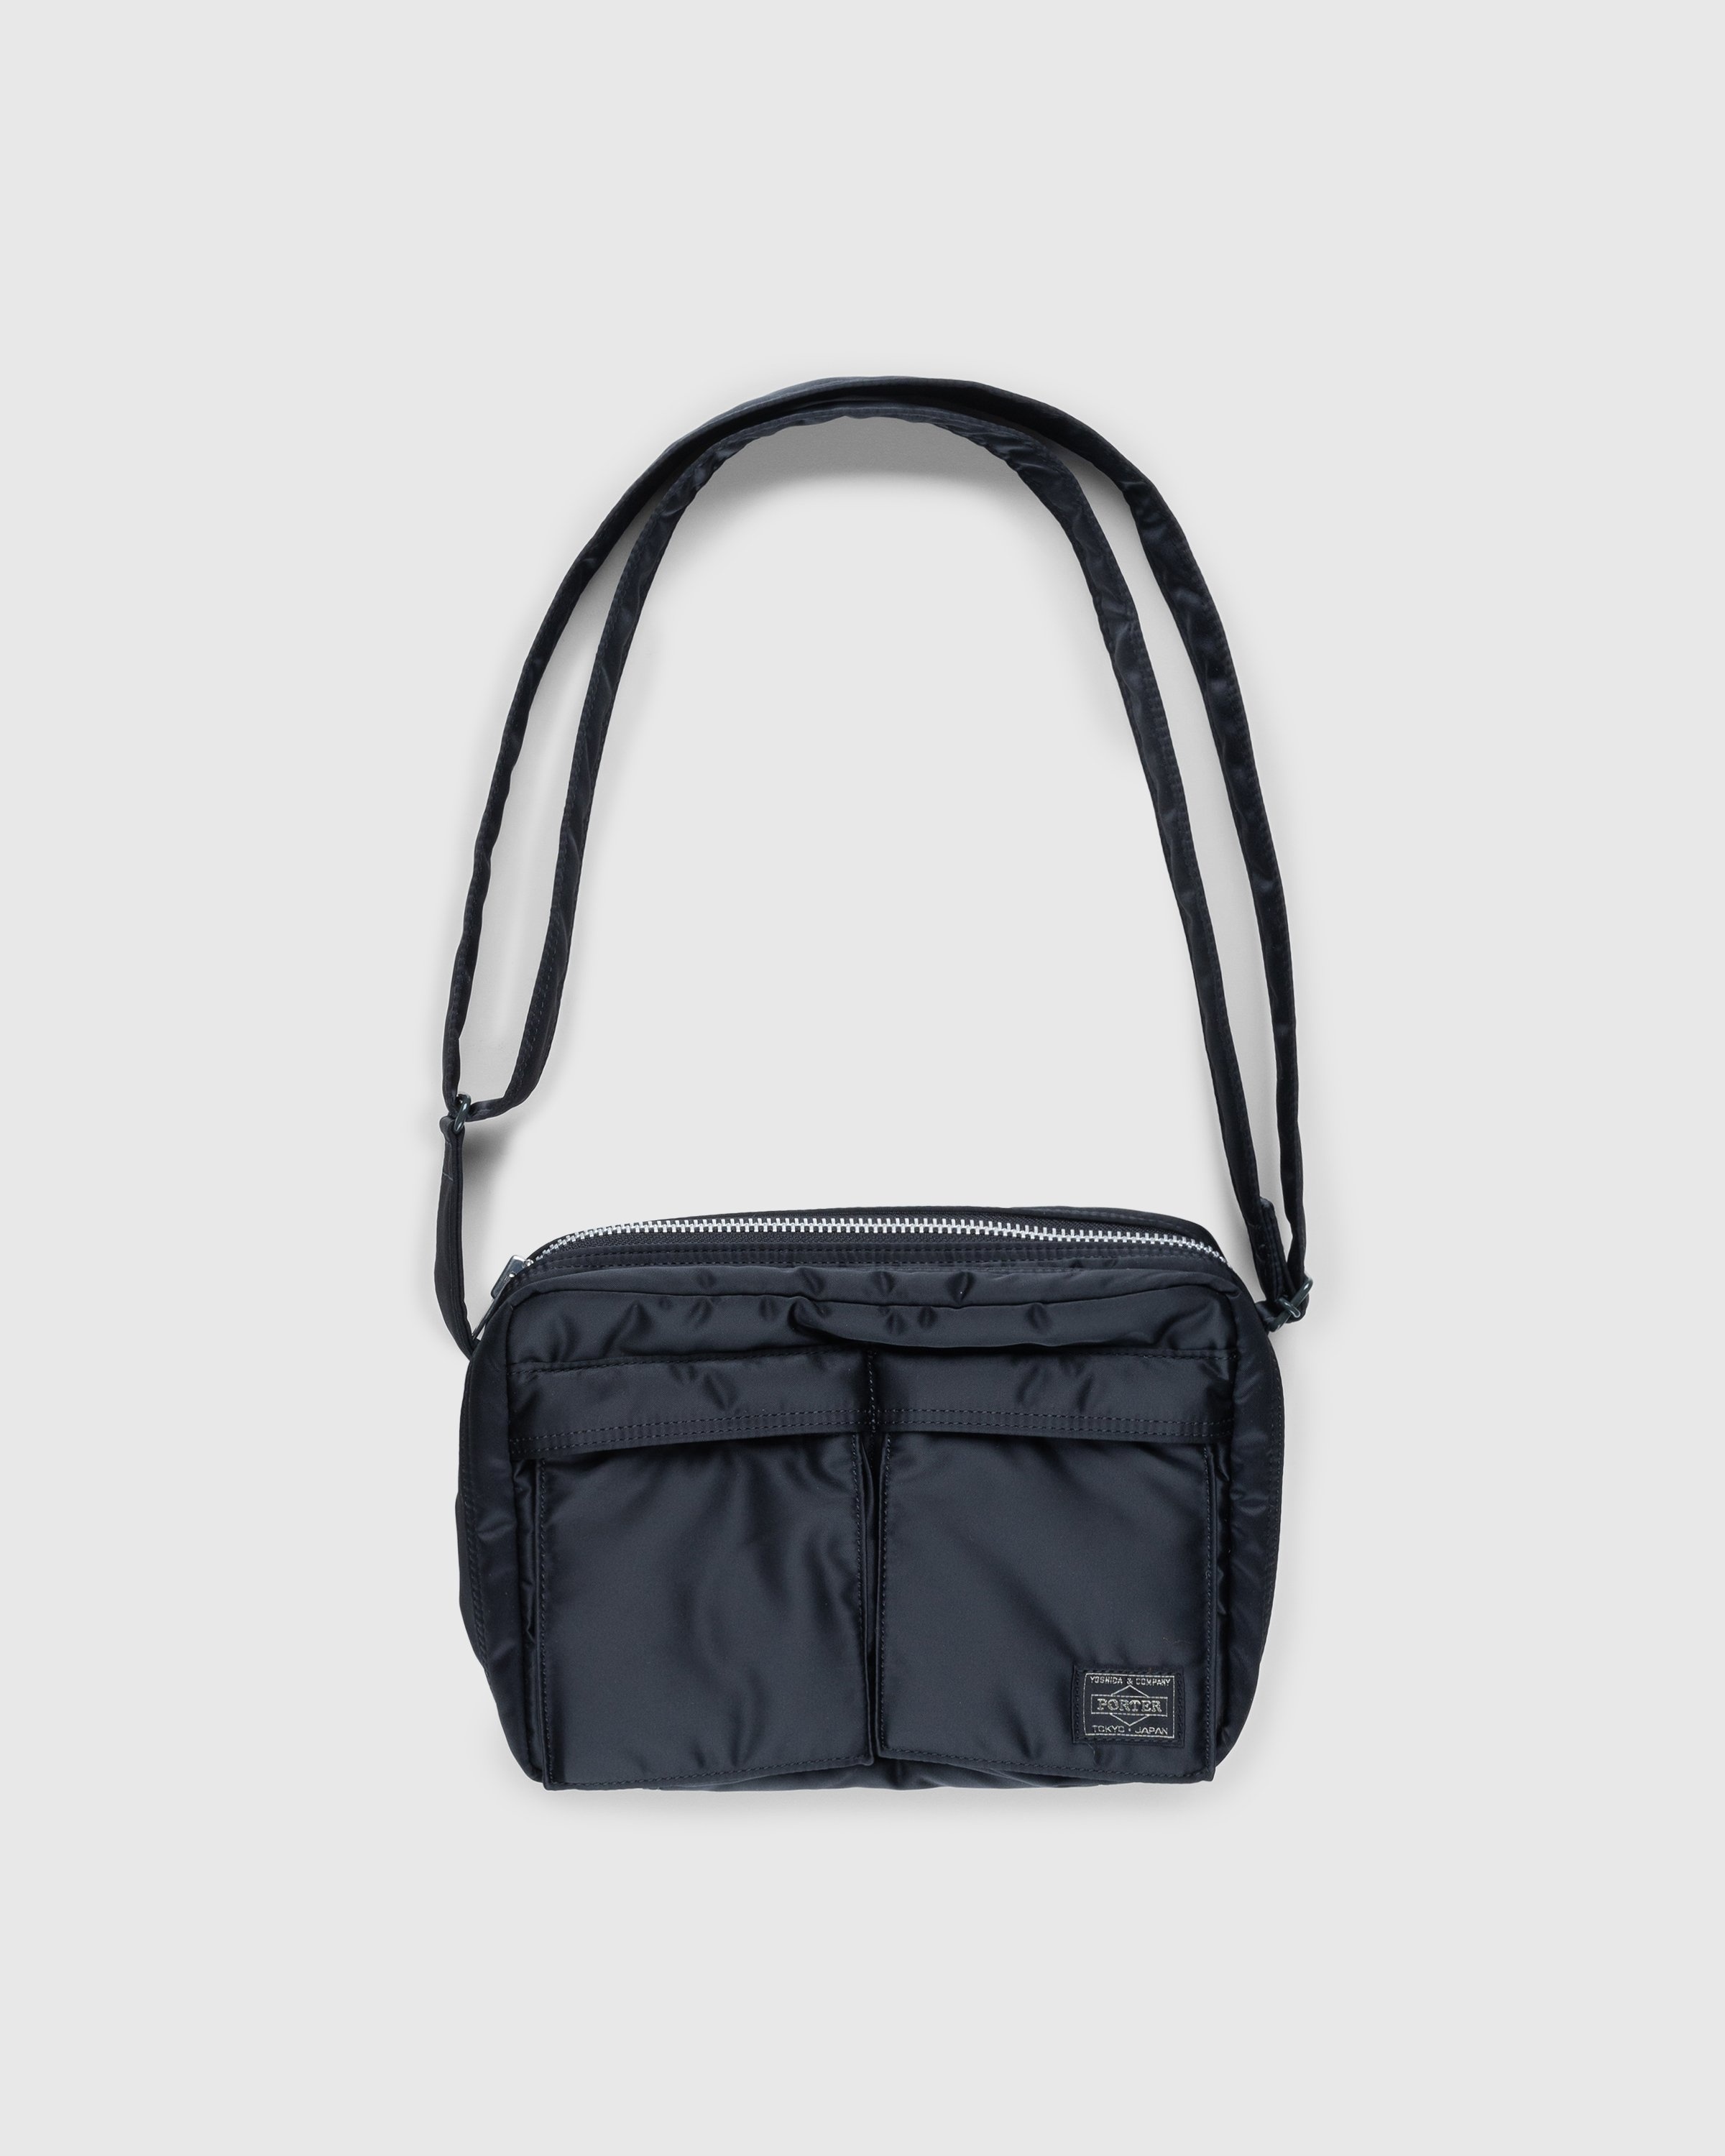 Porter-Yoshida & Co. Tanker Shoulder Bag - Farfetch